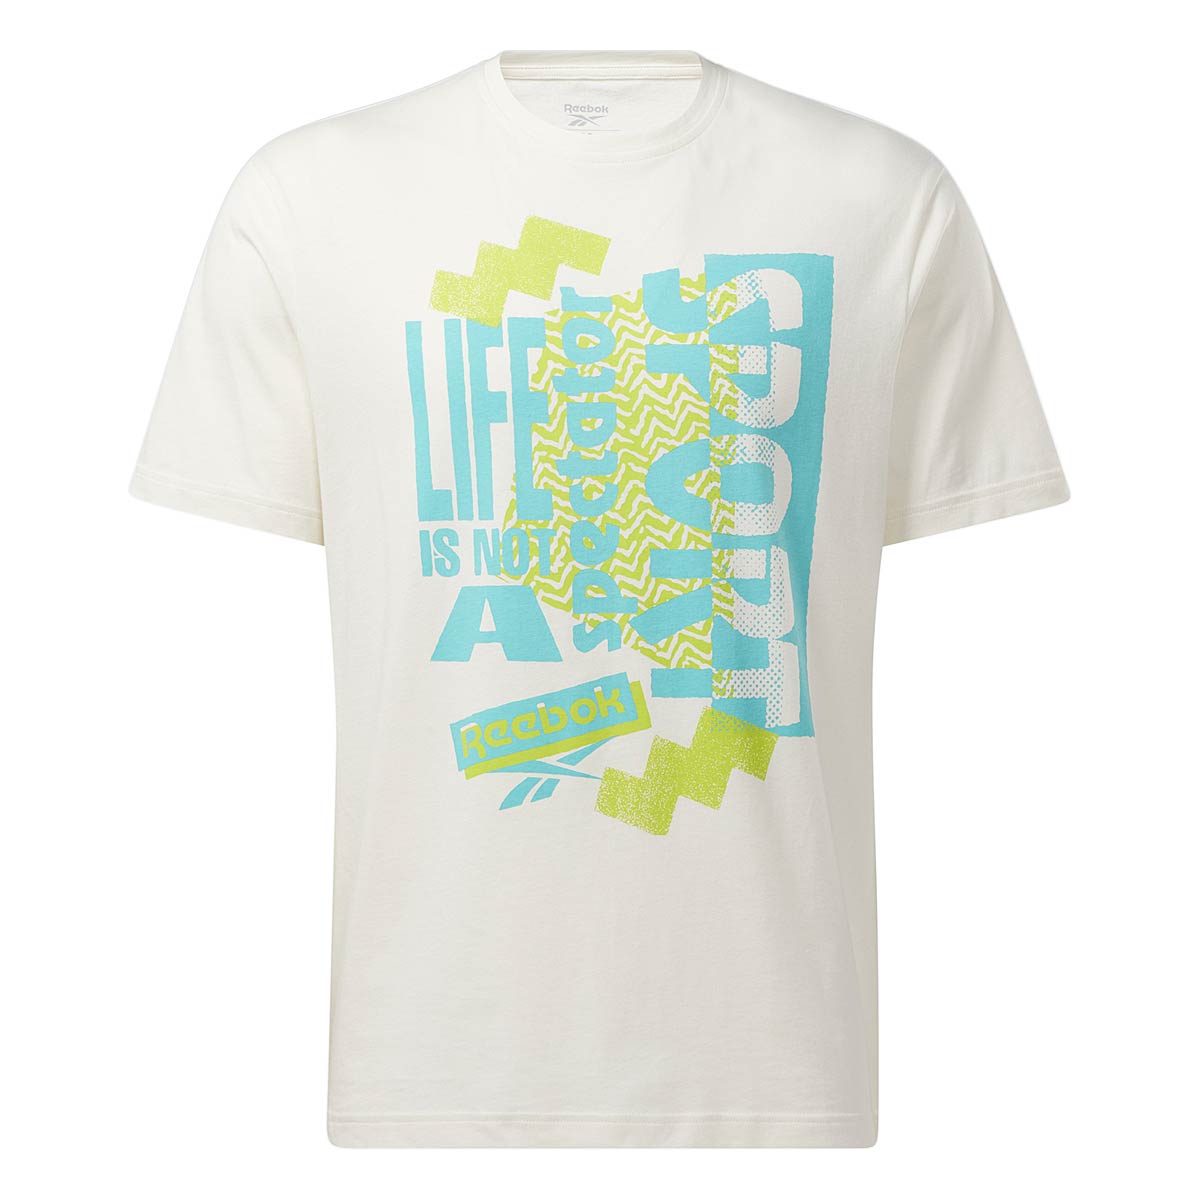 Reebok Gs Spectator Sport Vibe T-Shirt, White/Blue/Green